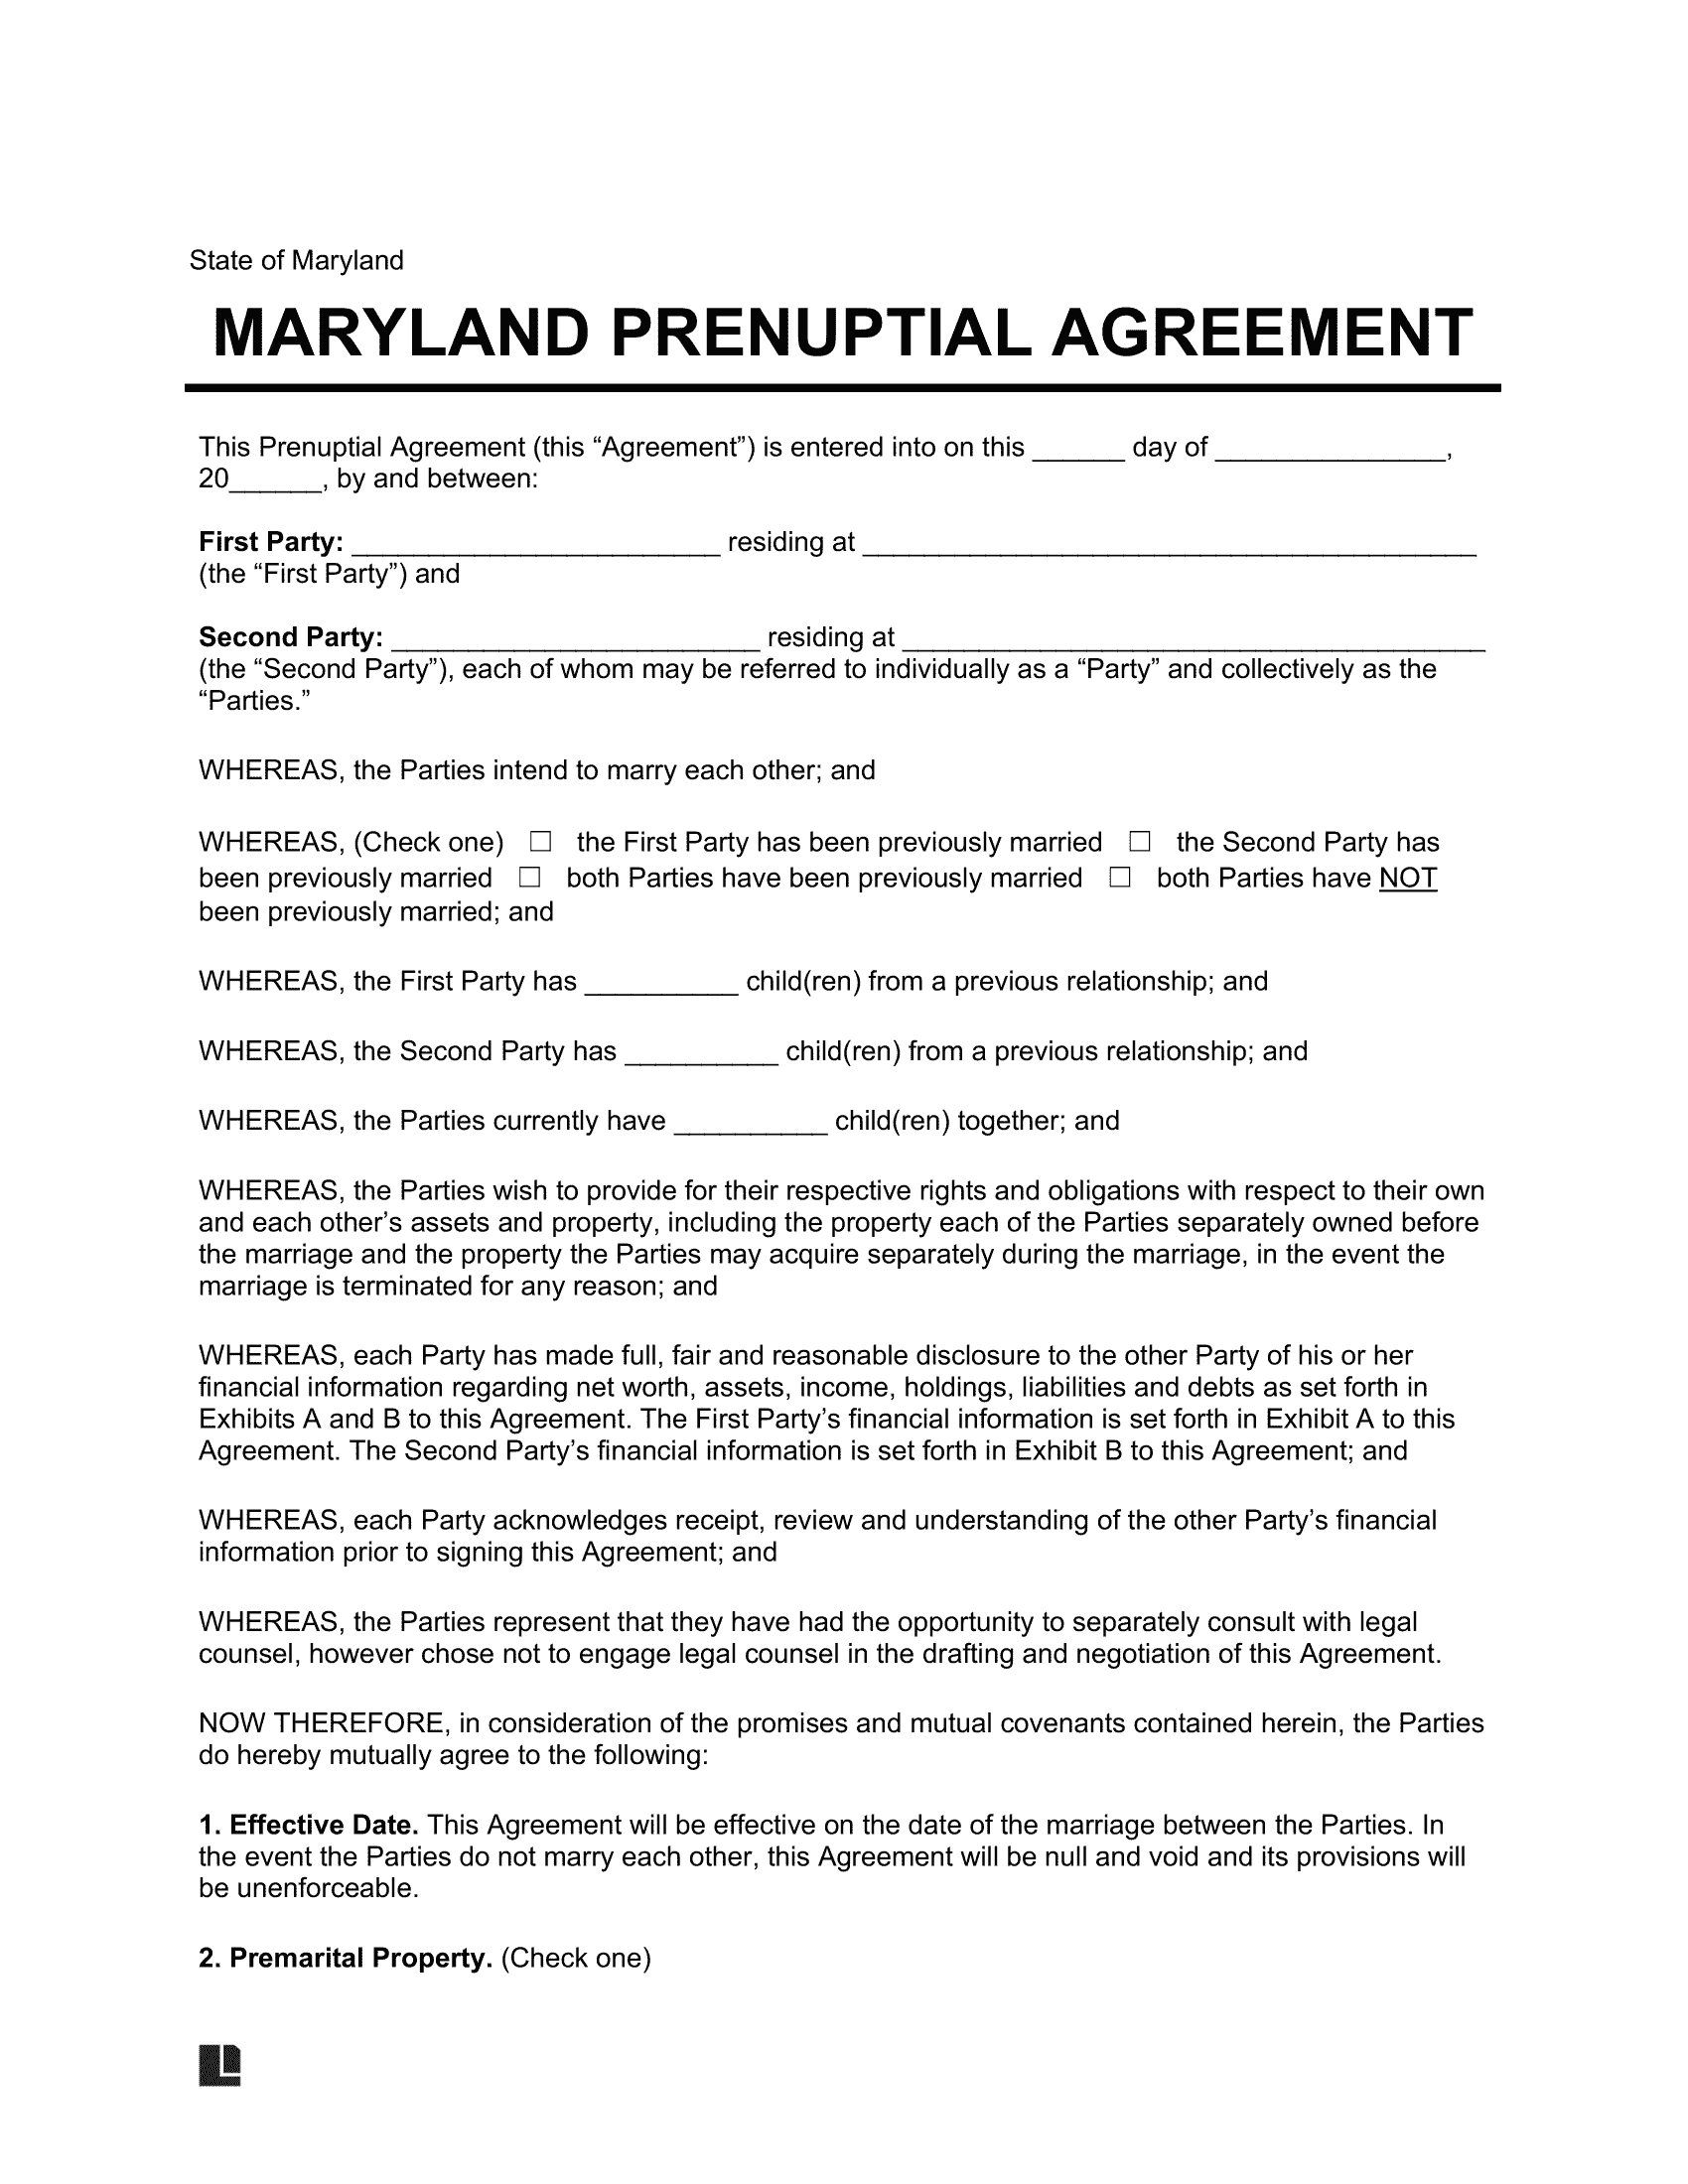 Maryland Prenuptial Agreement Template